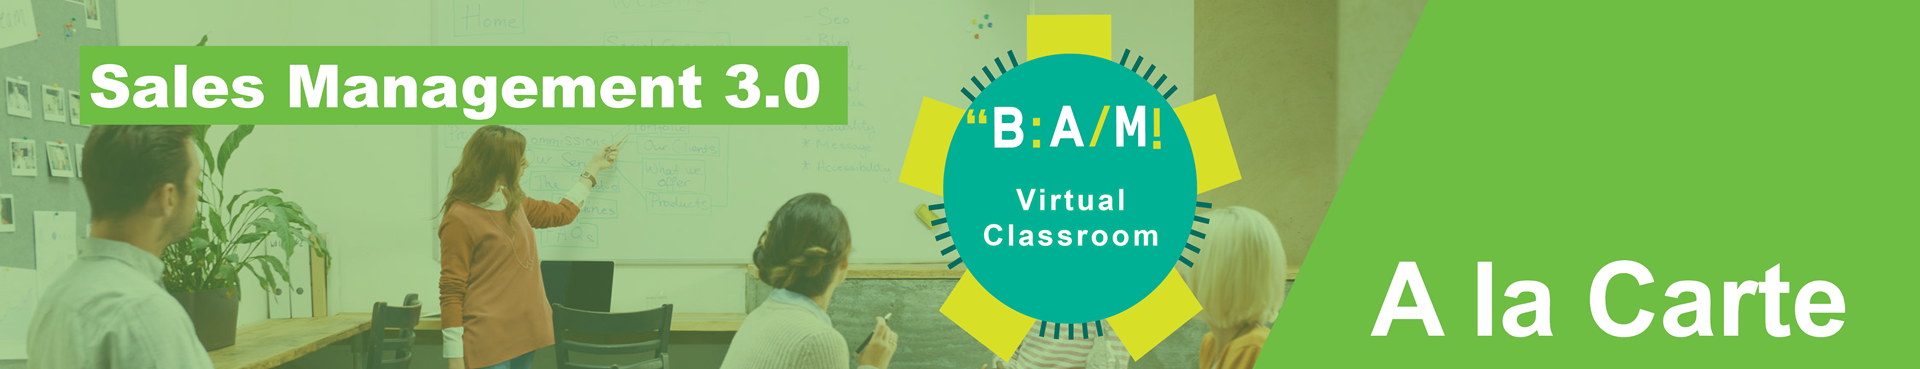 Sales management 3.0_virtual classroom